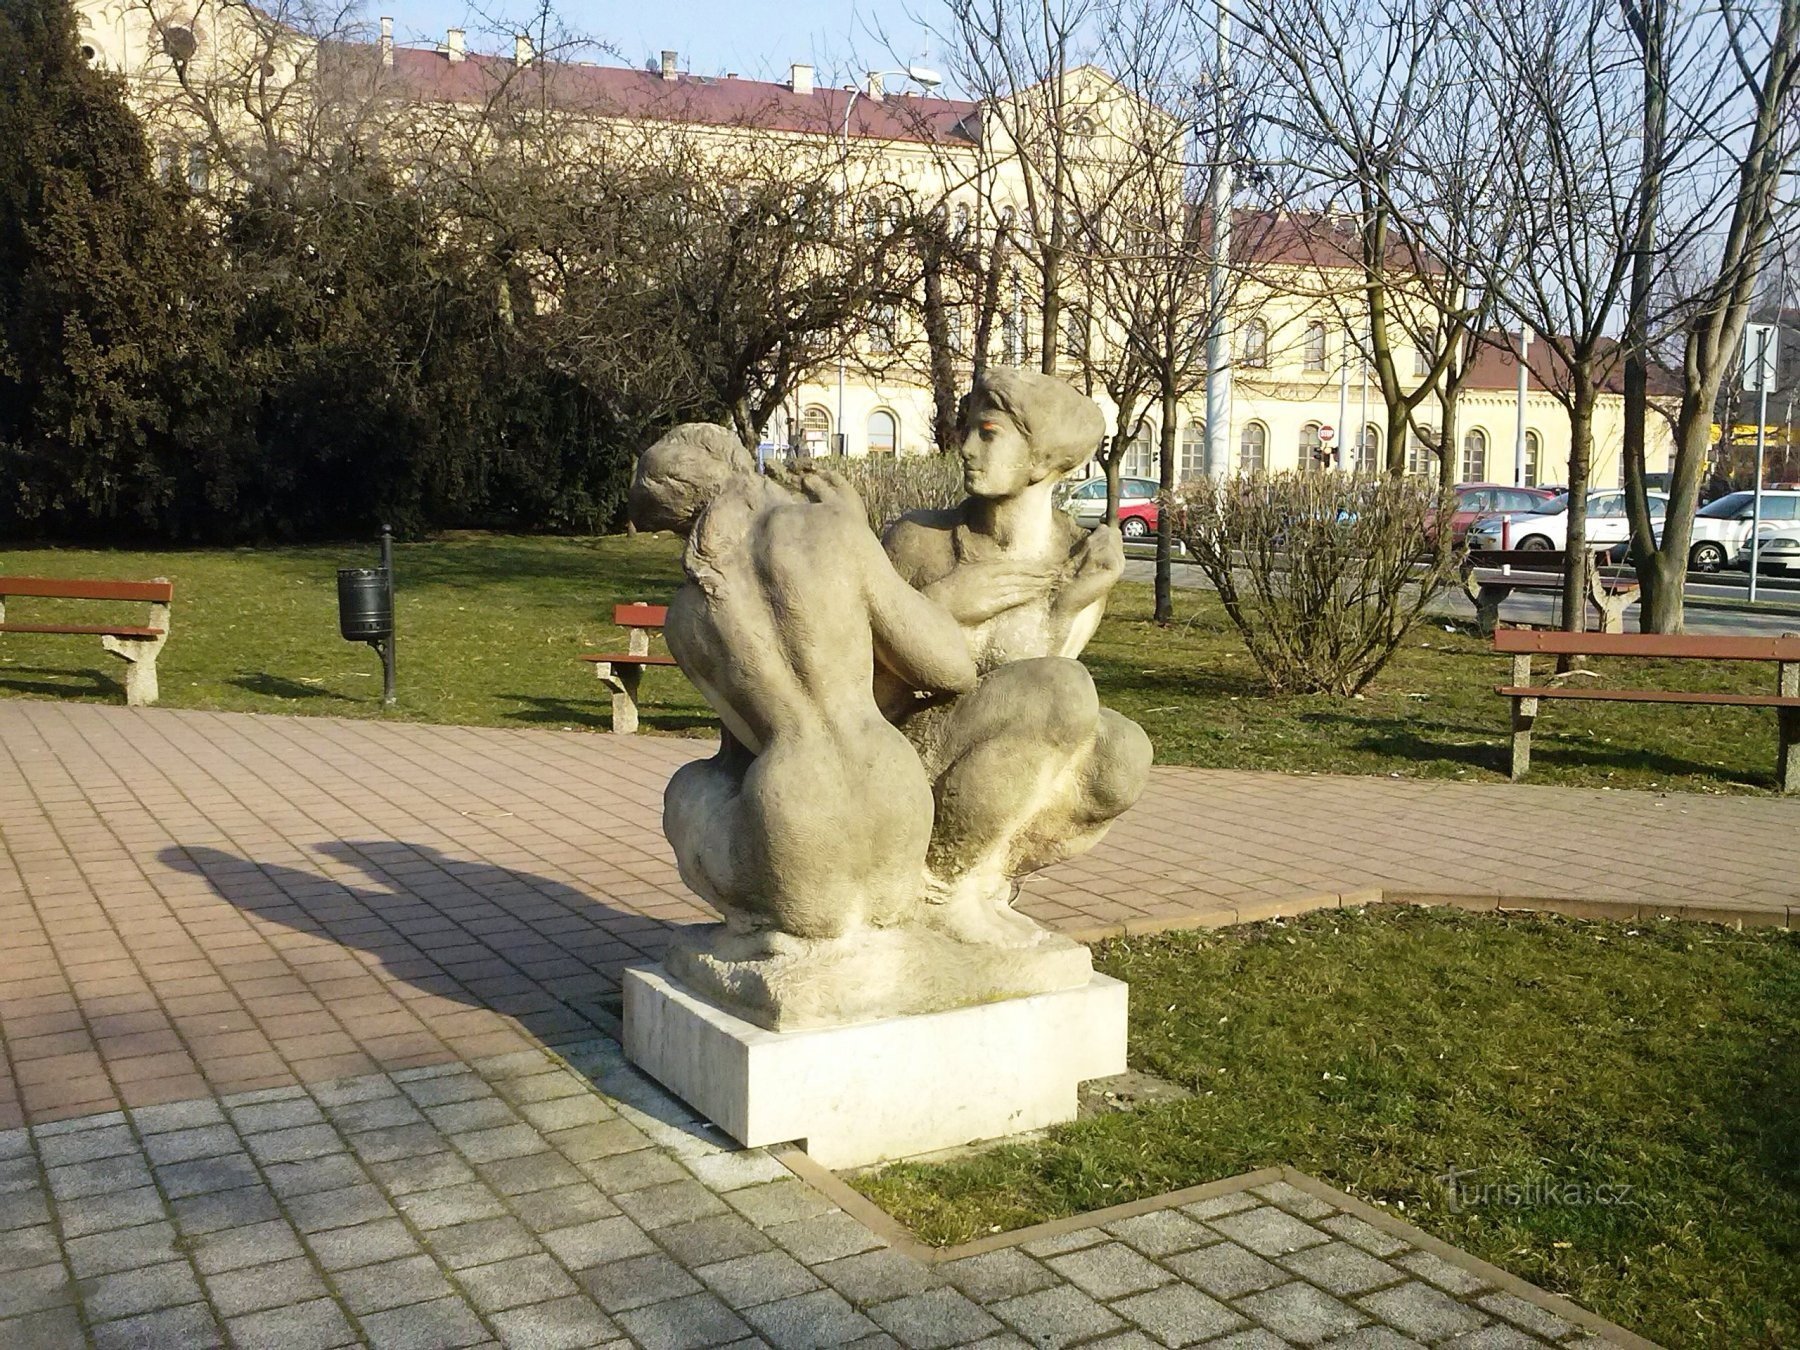 2. Kipovi u parku kraj kolodvora